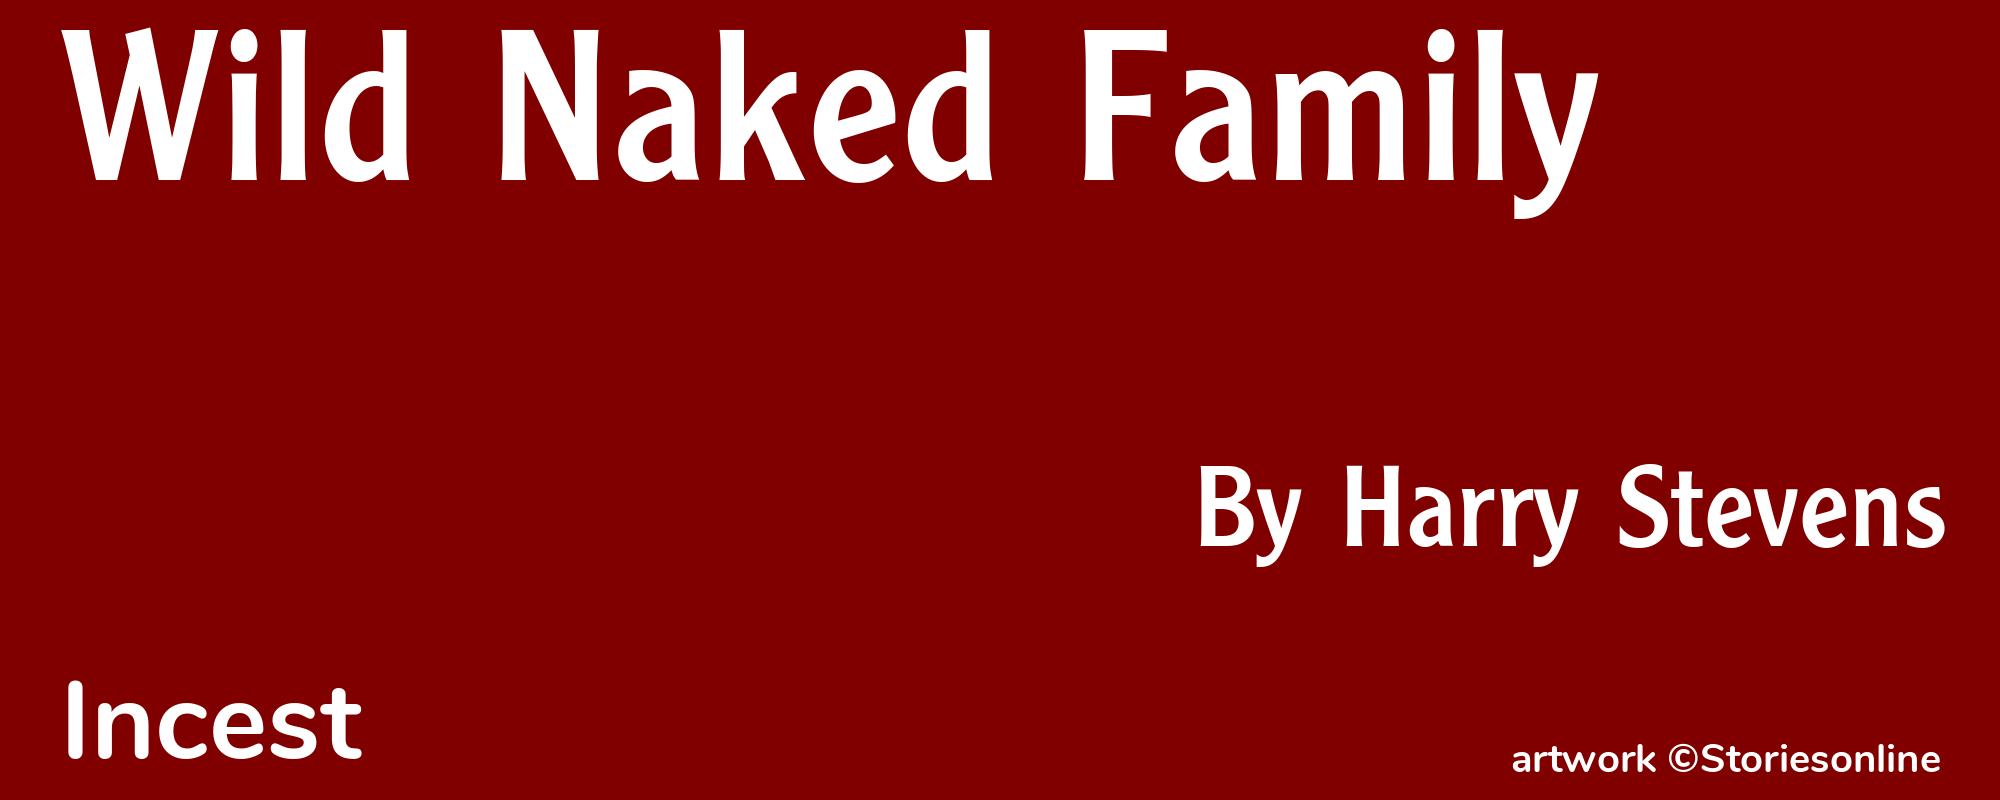 Wild Naked Family - Cover